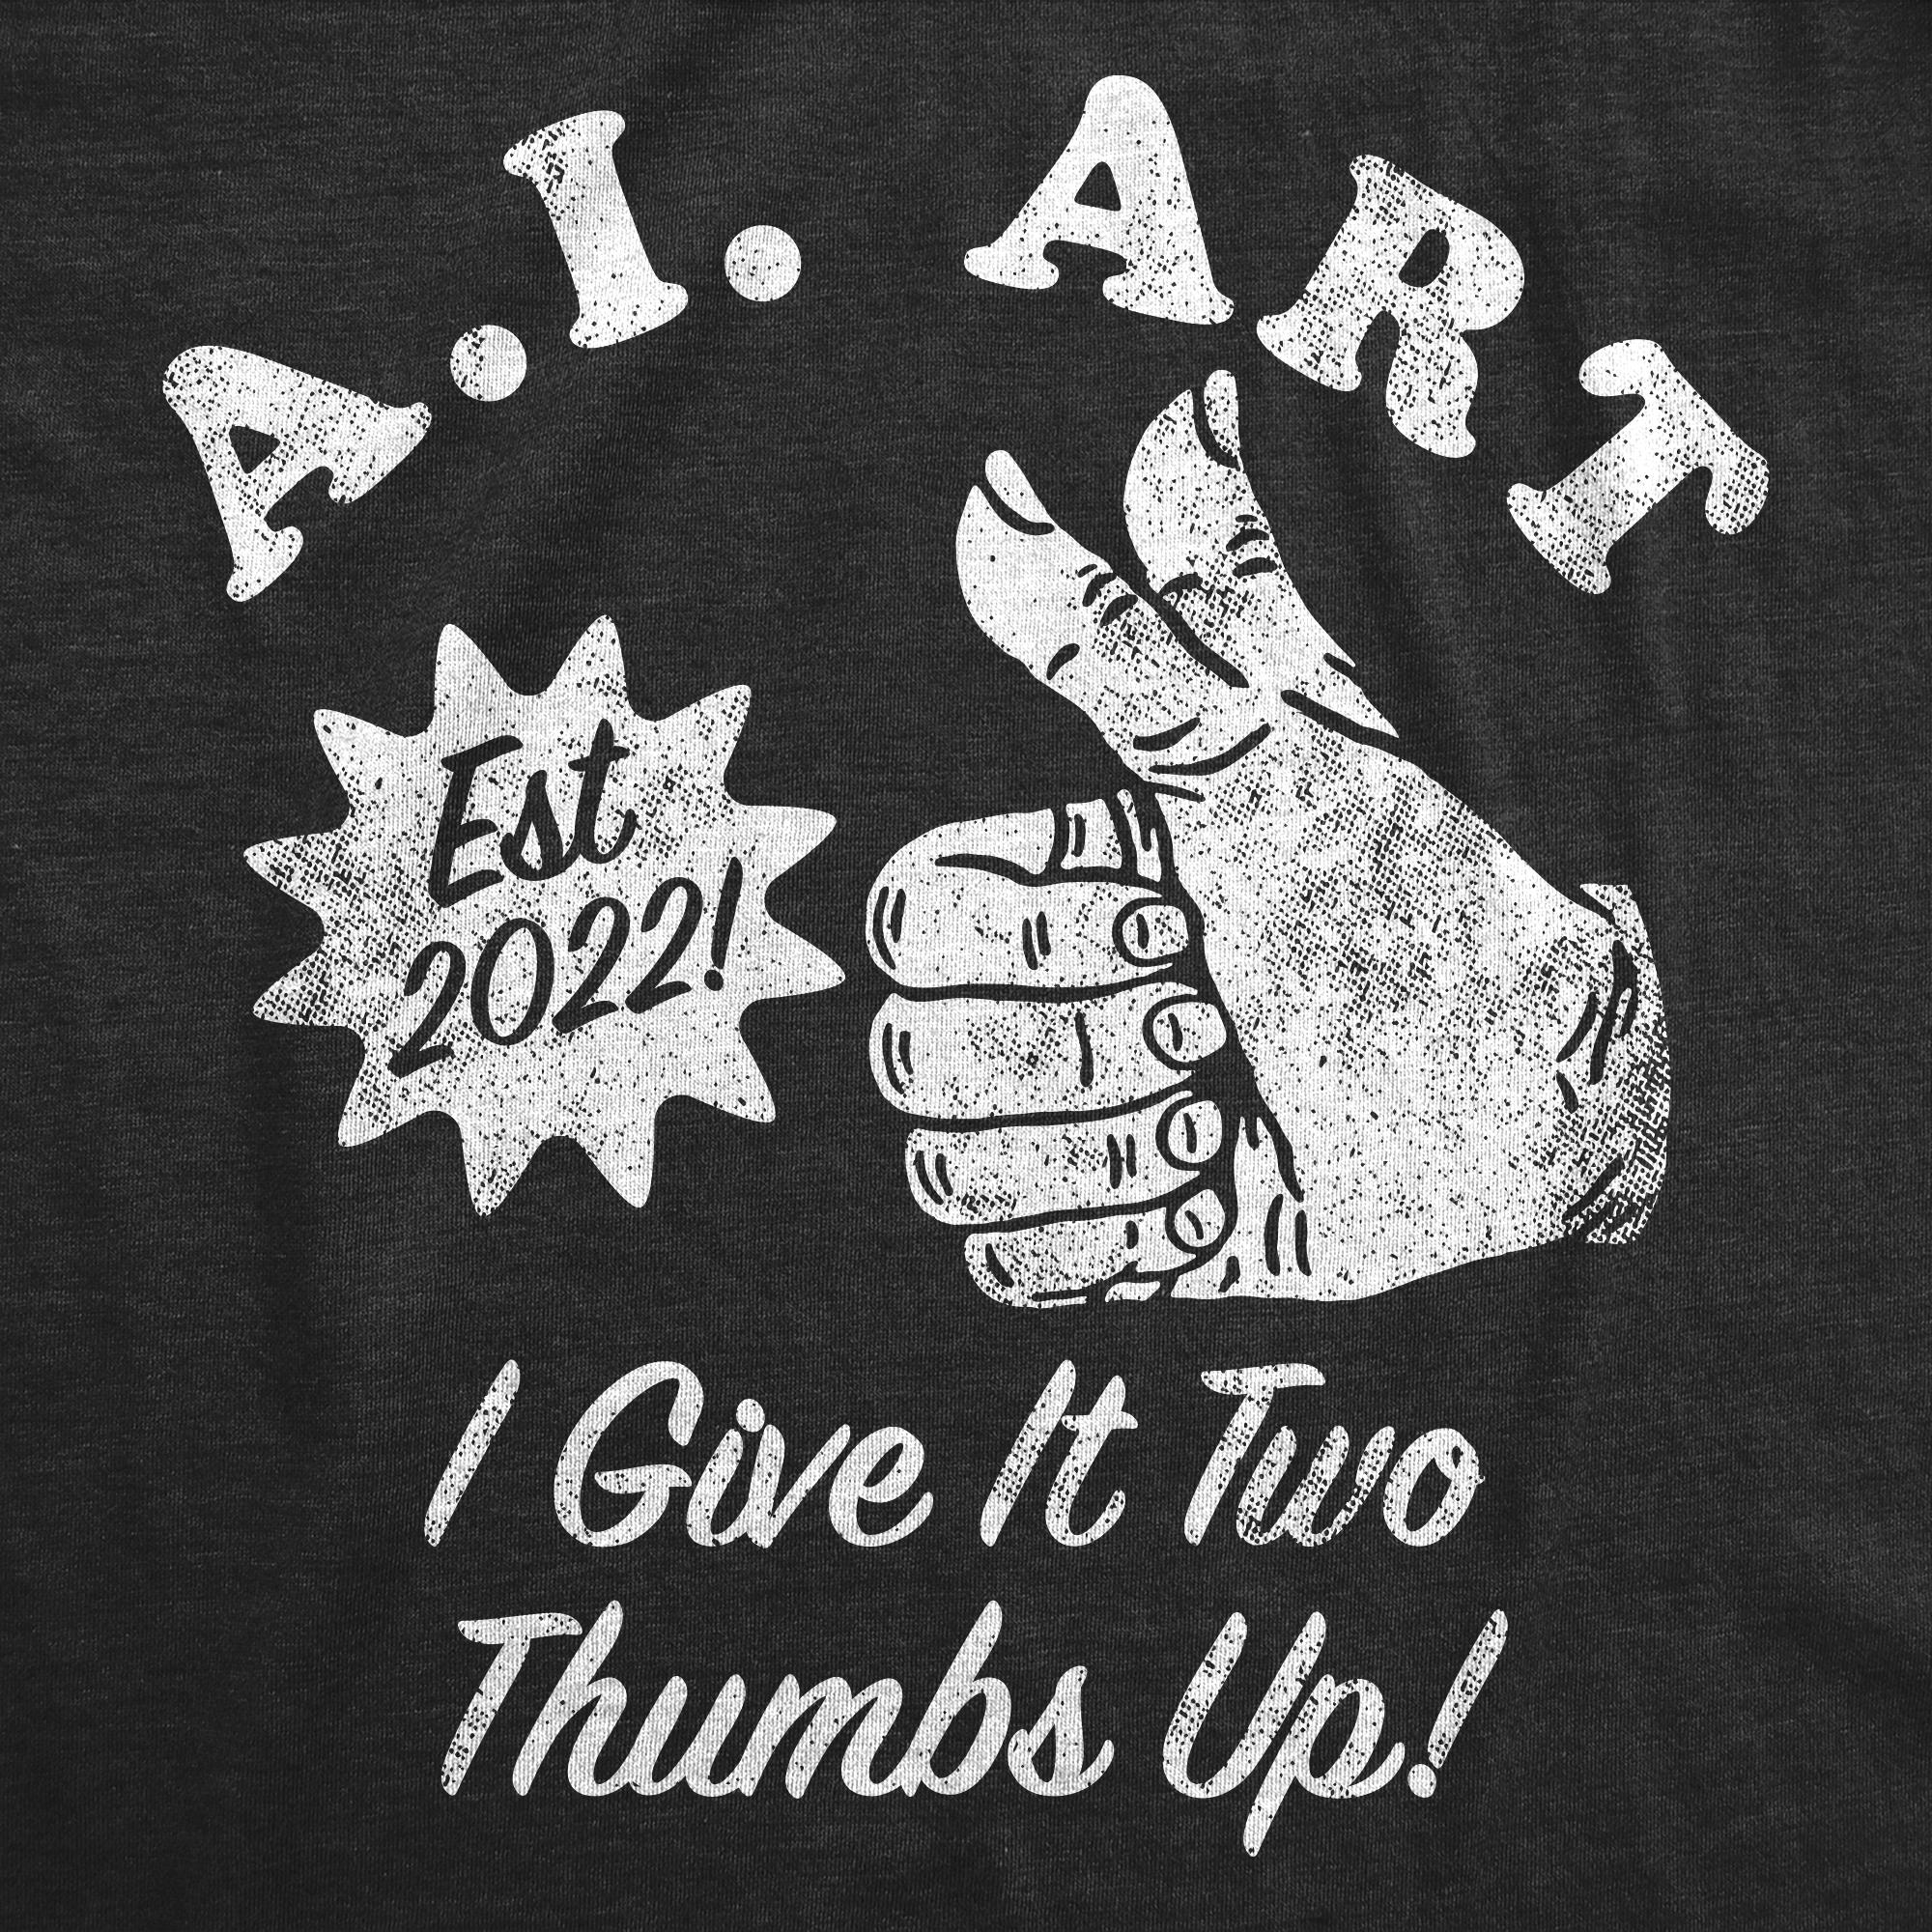 Funny Heather Black - AI Art AI Art Mens T Shirt Nerdy sarcastic internet Tee